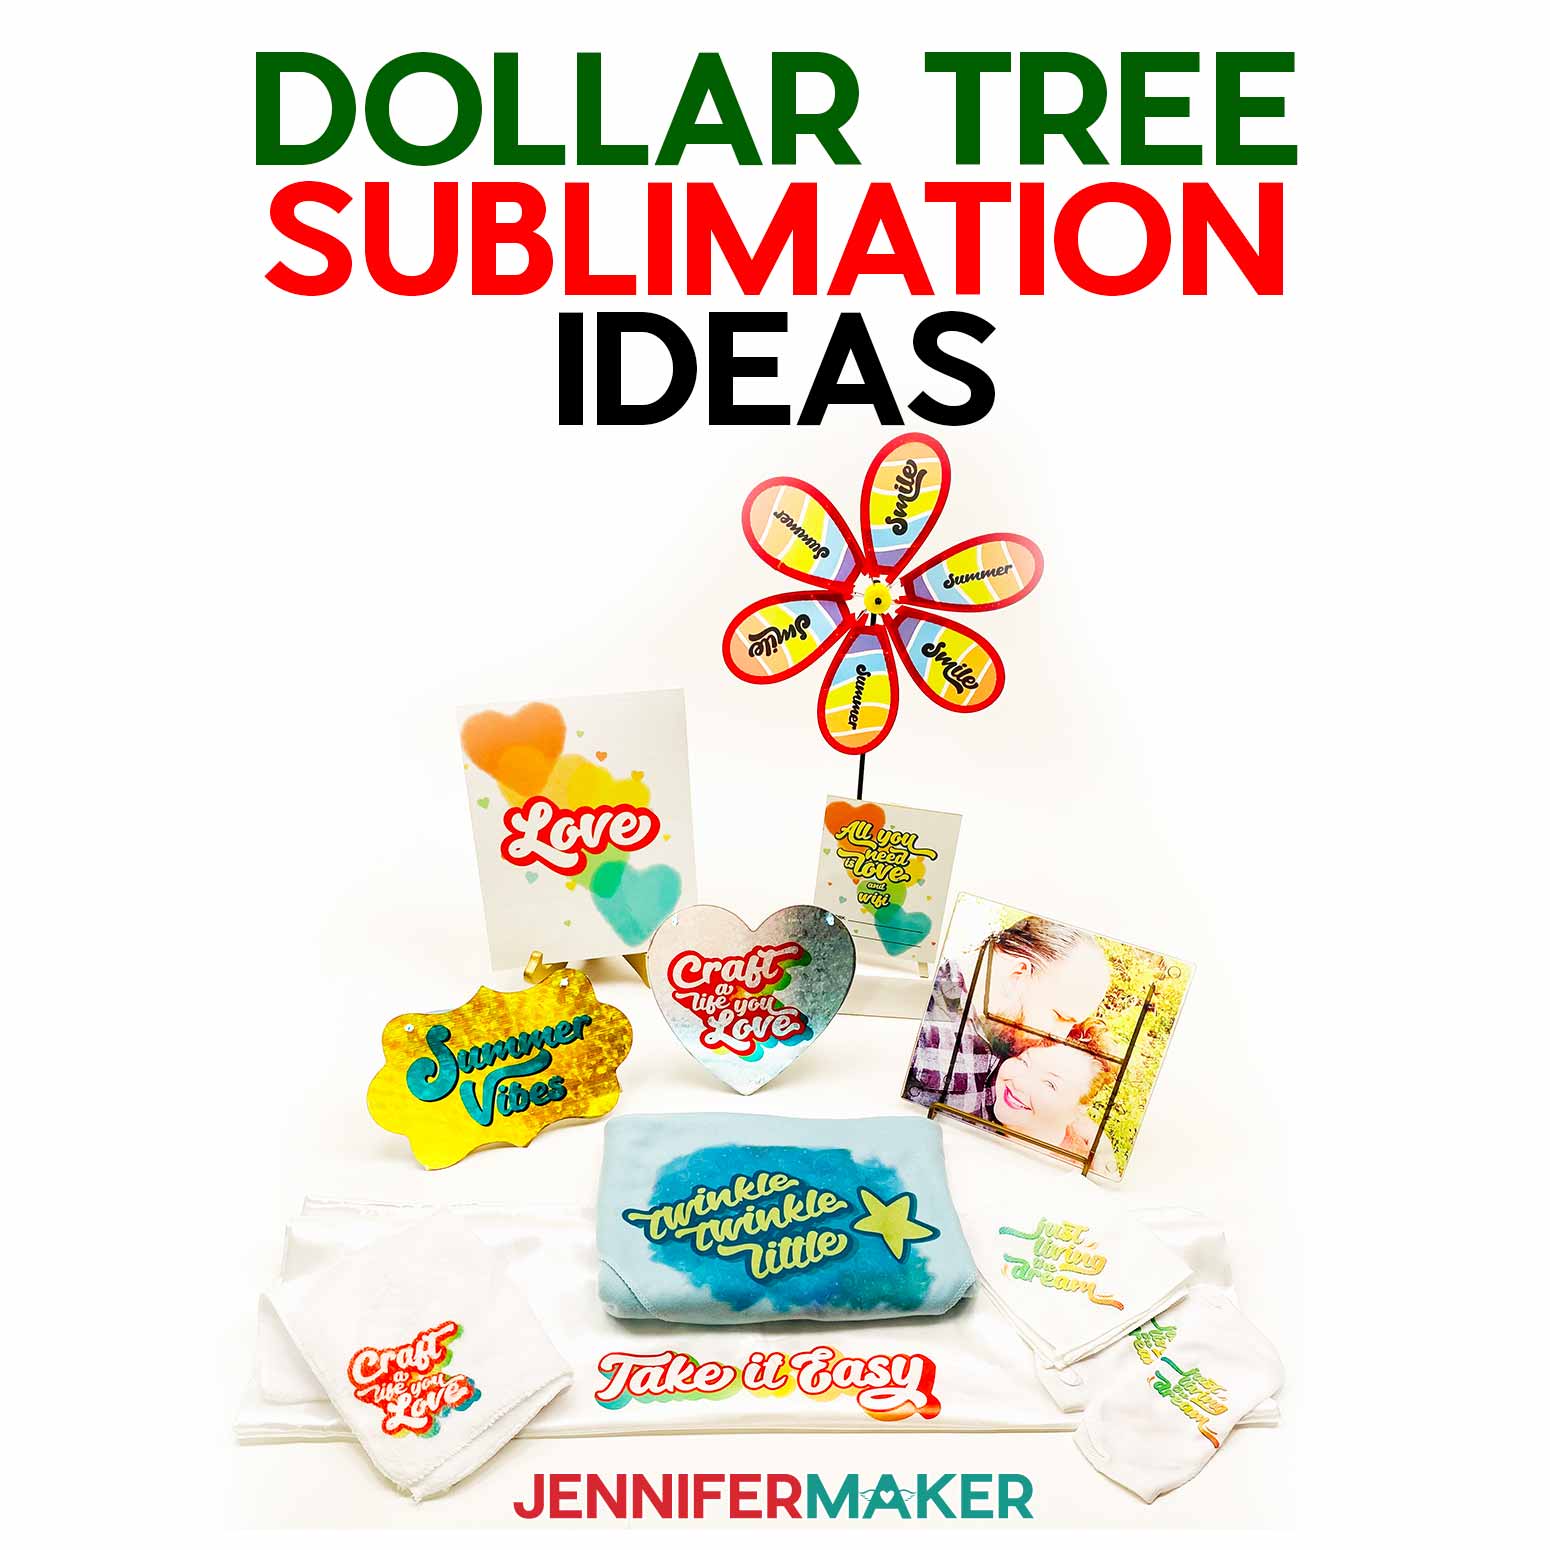 Dollar Tree Sublimation Ideas: Dozens of Options!